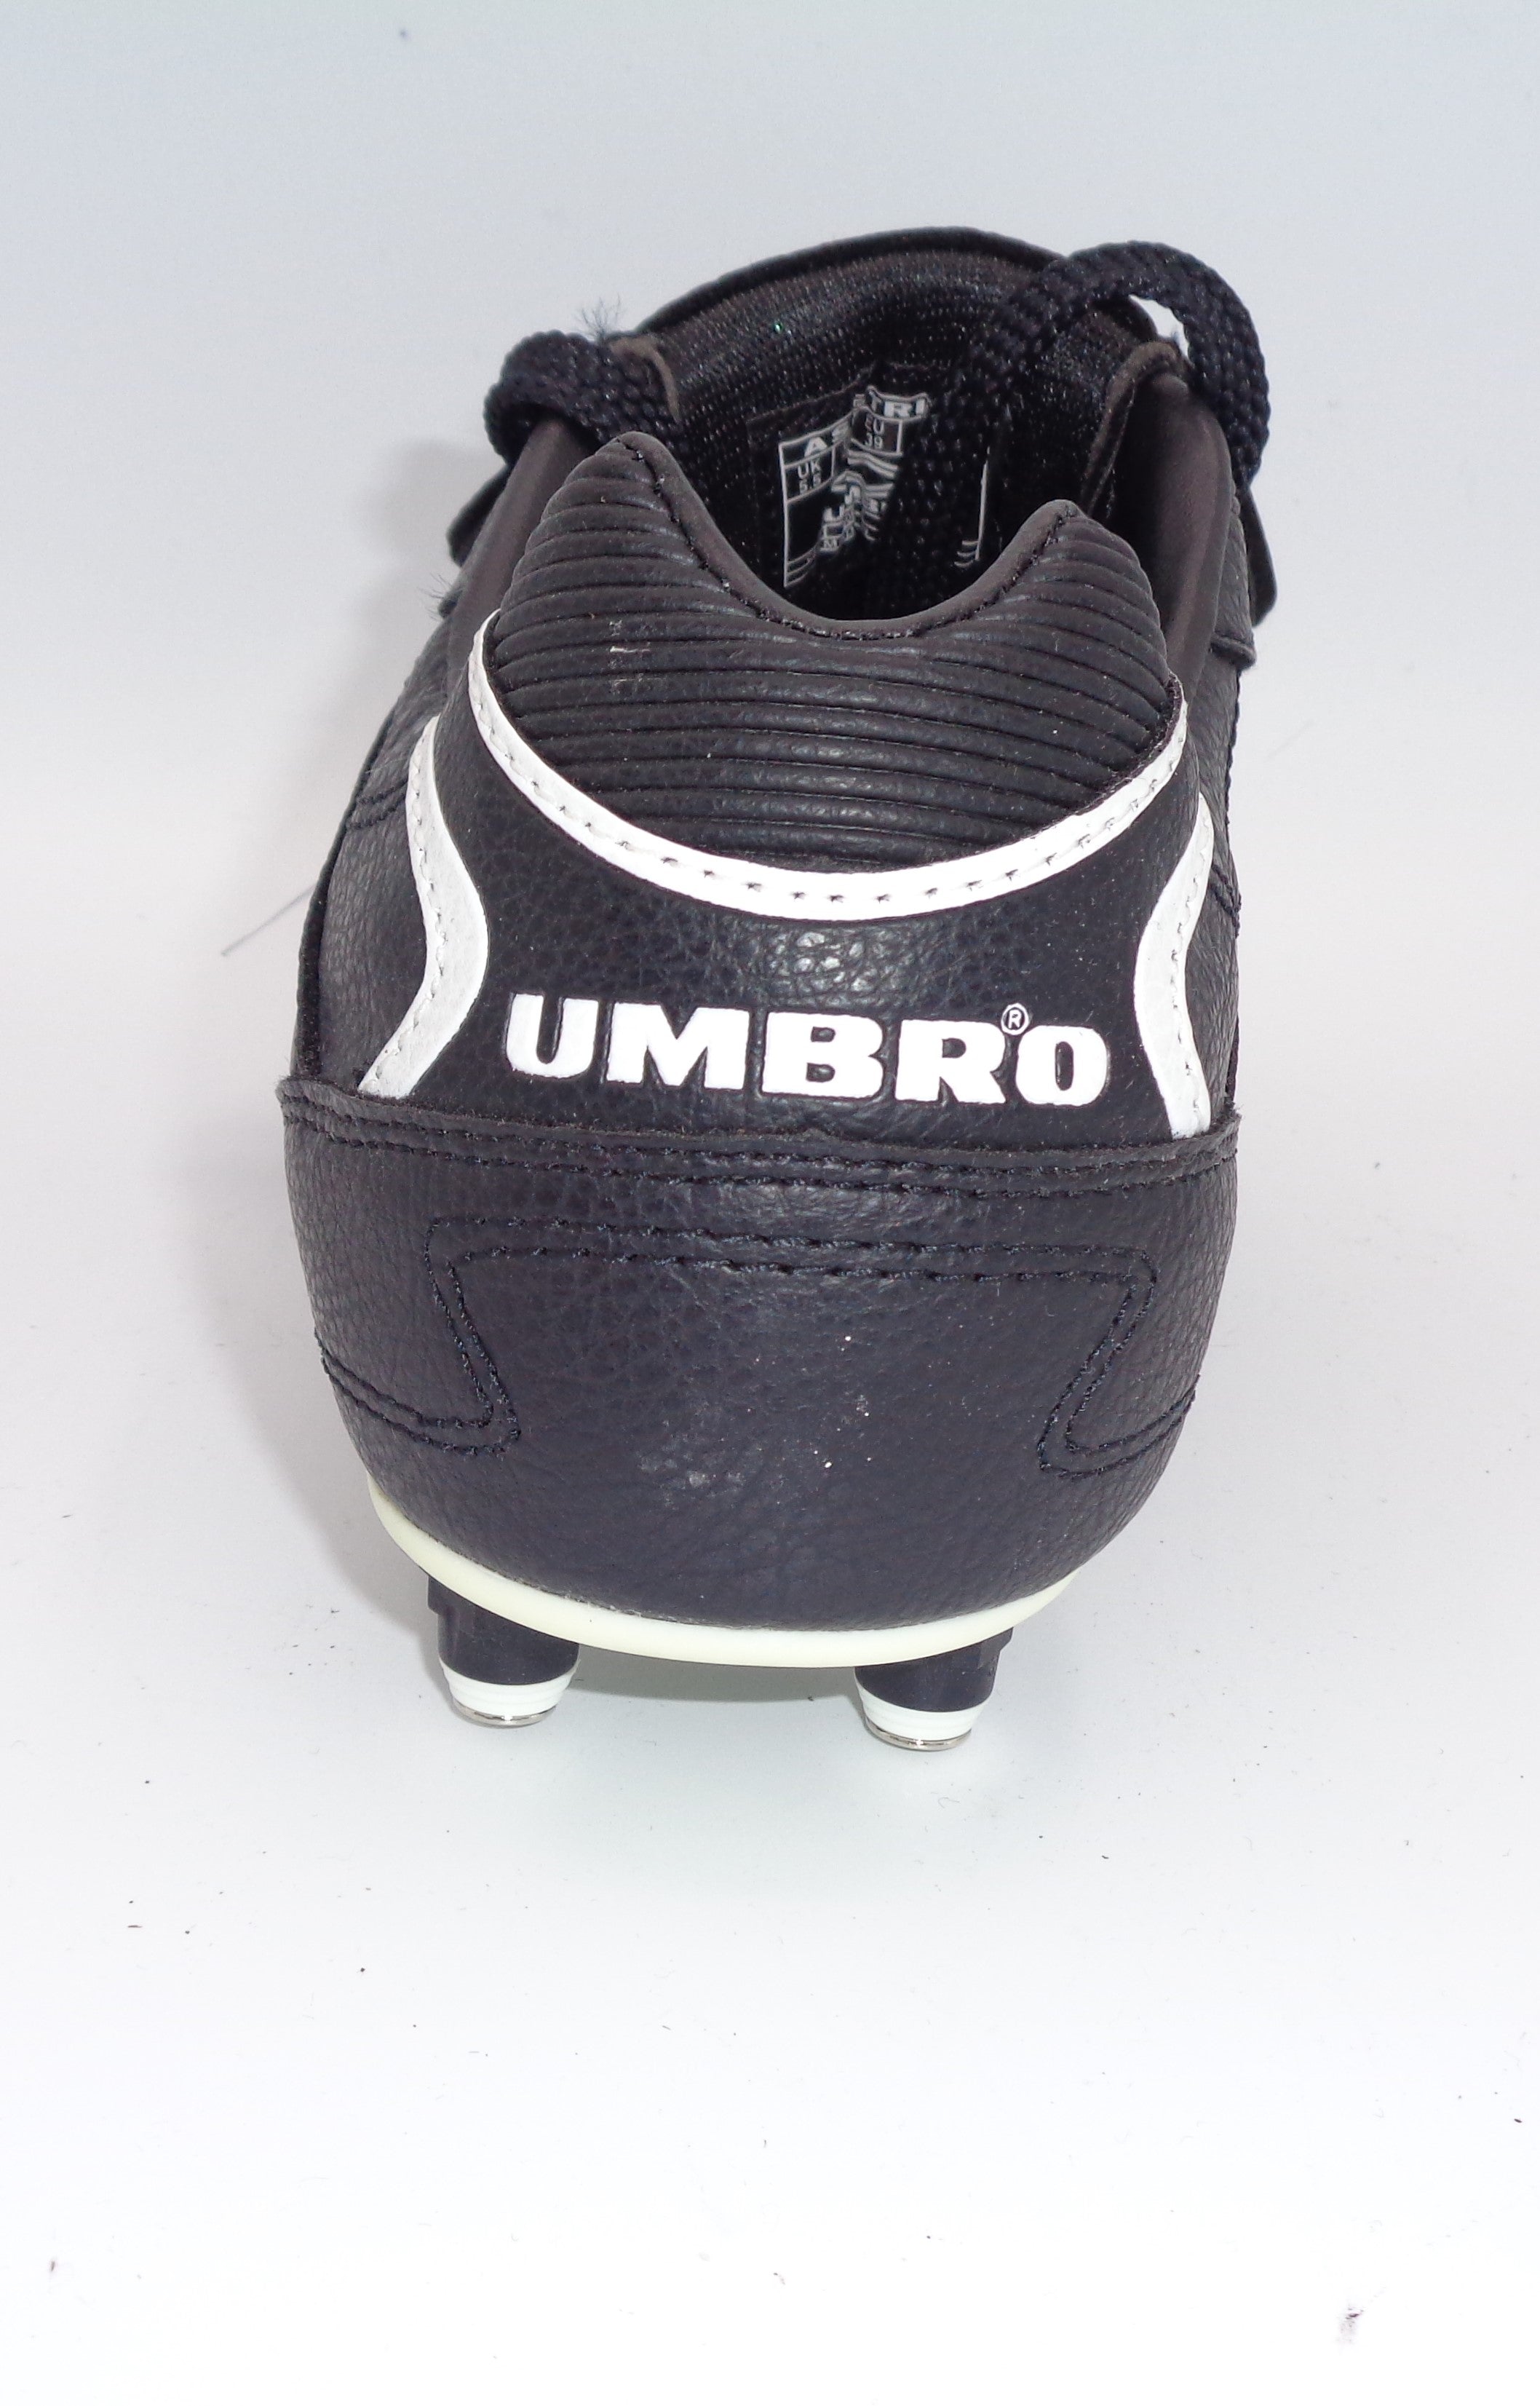 UMBRO AS STRIKE FOOTBALL BOOTS - UMBRO - SIZE 5